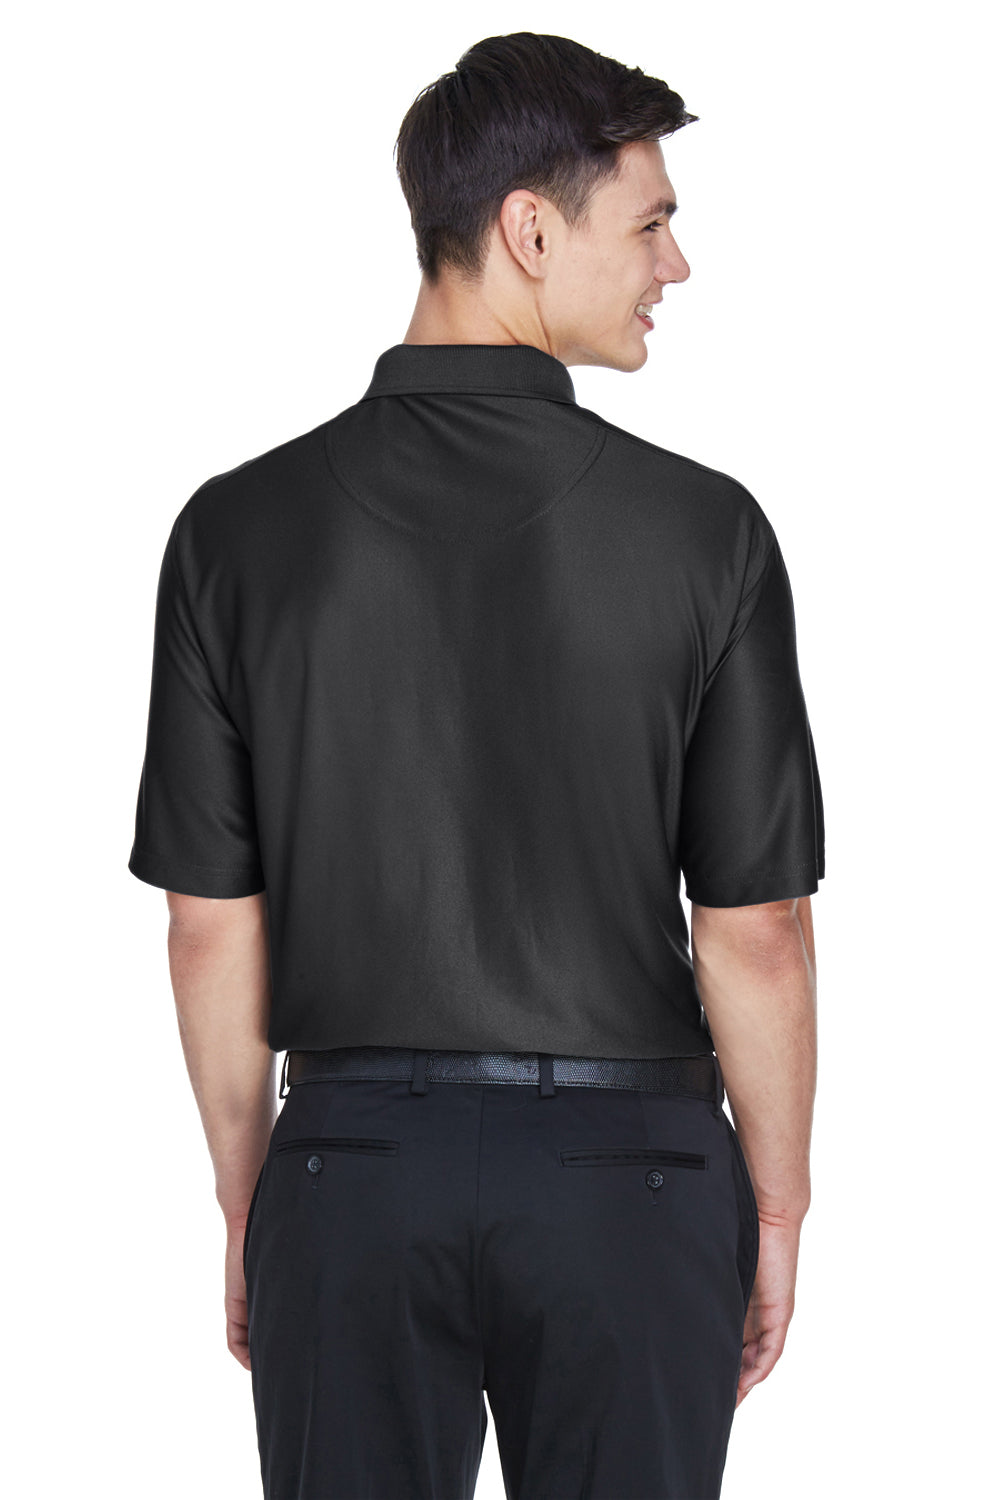 UltraClub 8415 Mens Cool & Dry Elite Performance Moisture Wicking Short Sleeve Polo Shirt Black Back